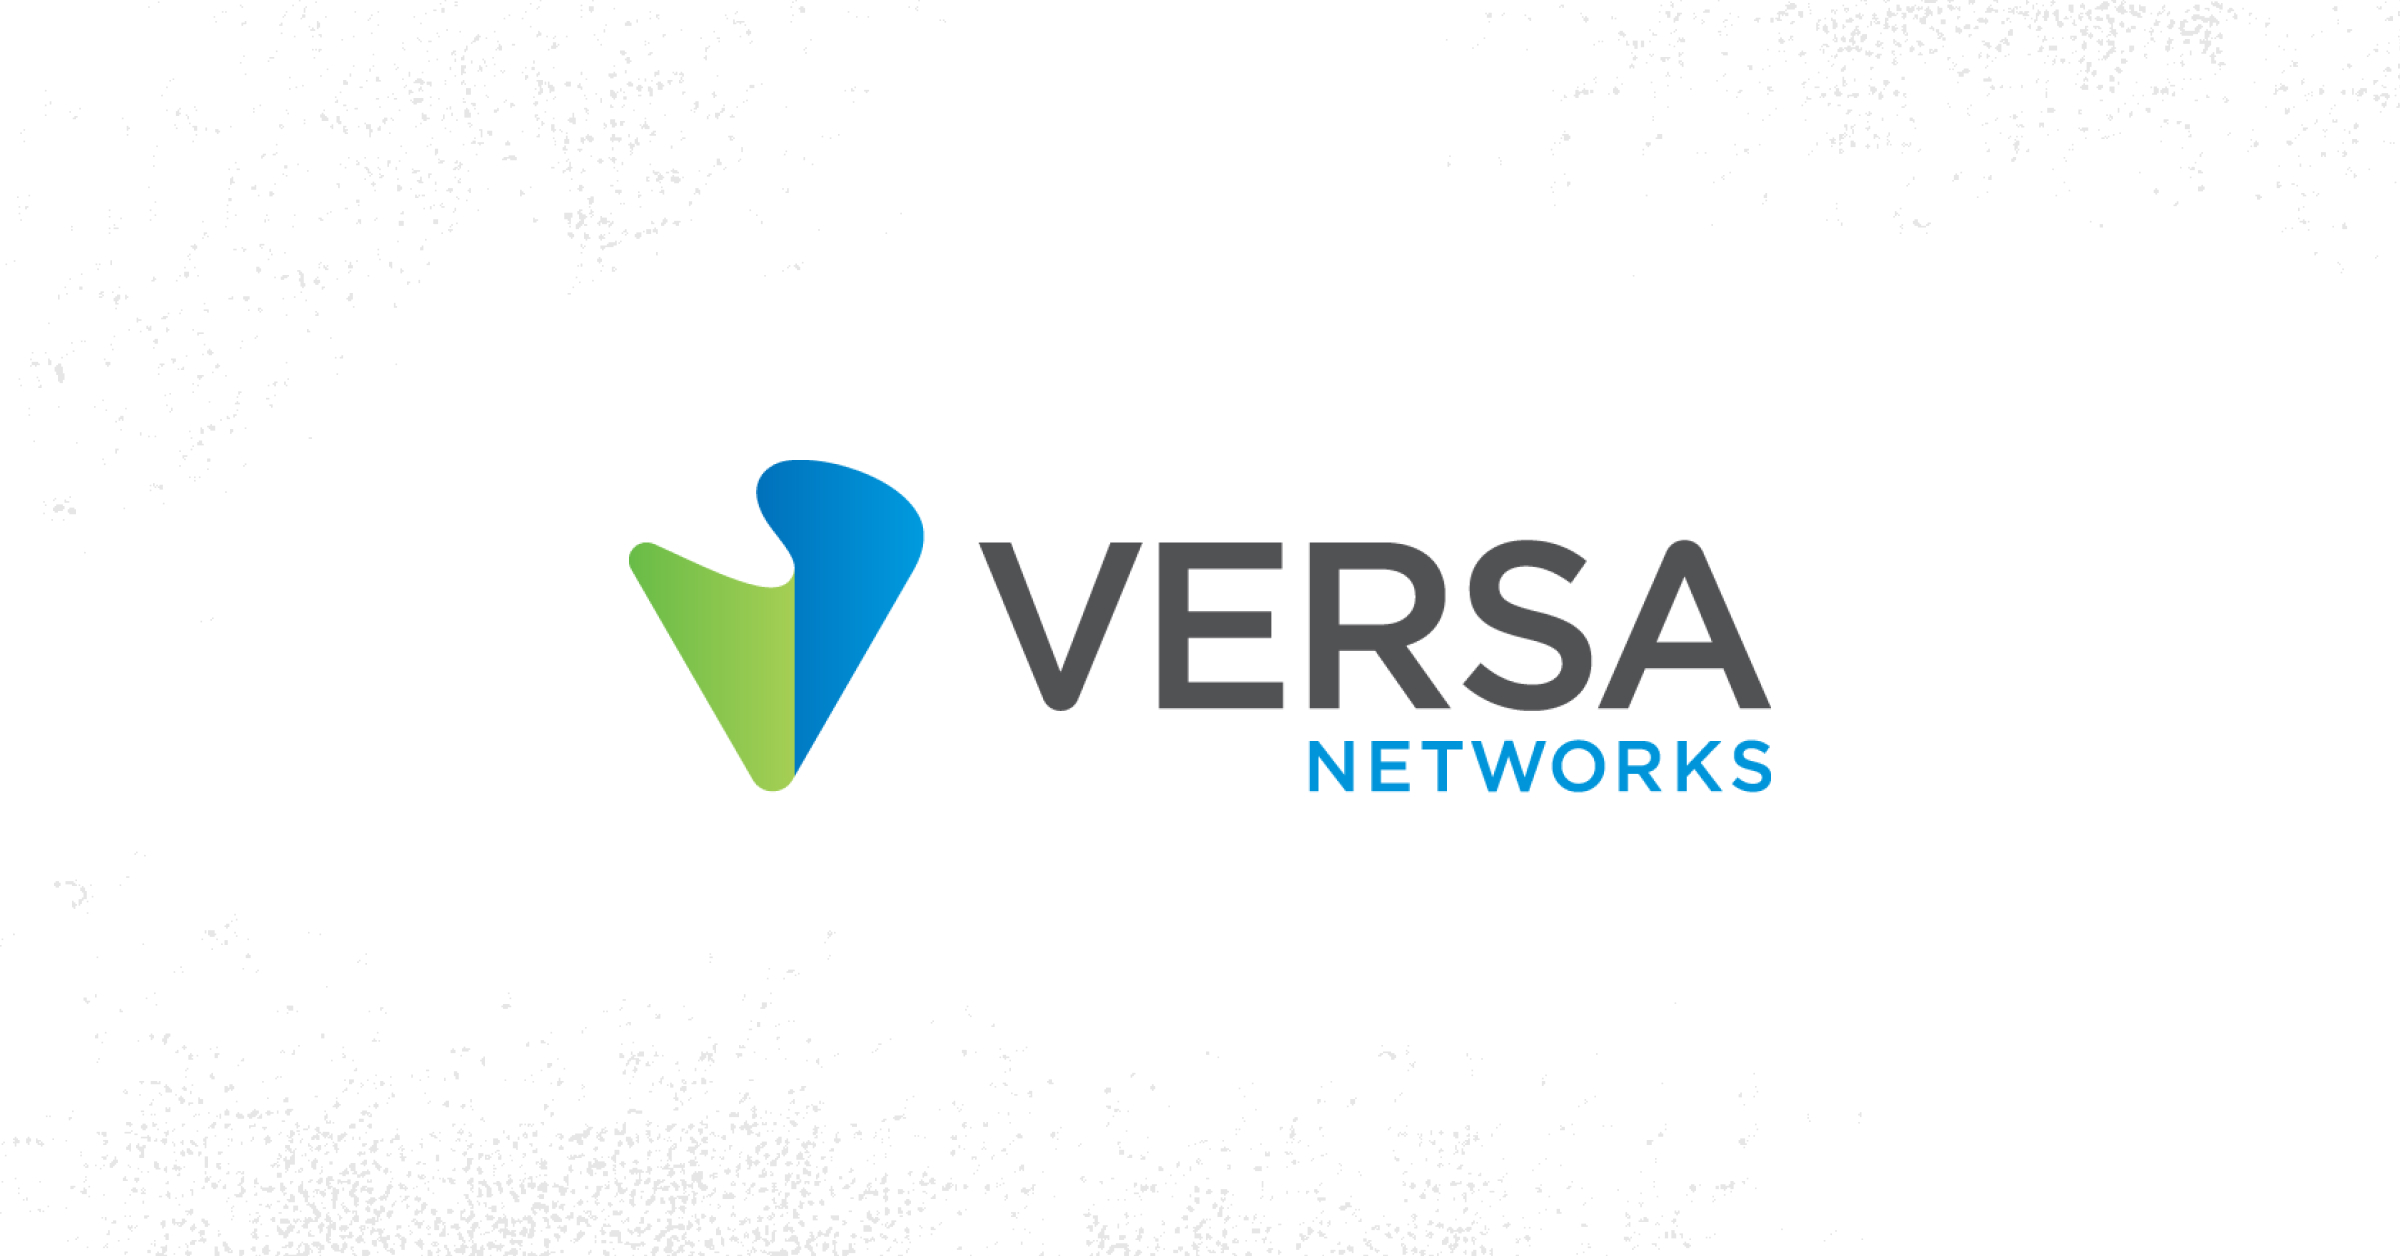 VERSA Networks VOS™ (Versa Operating System)